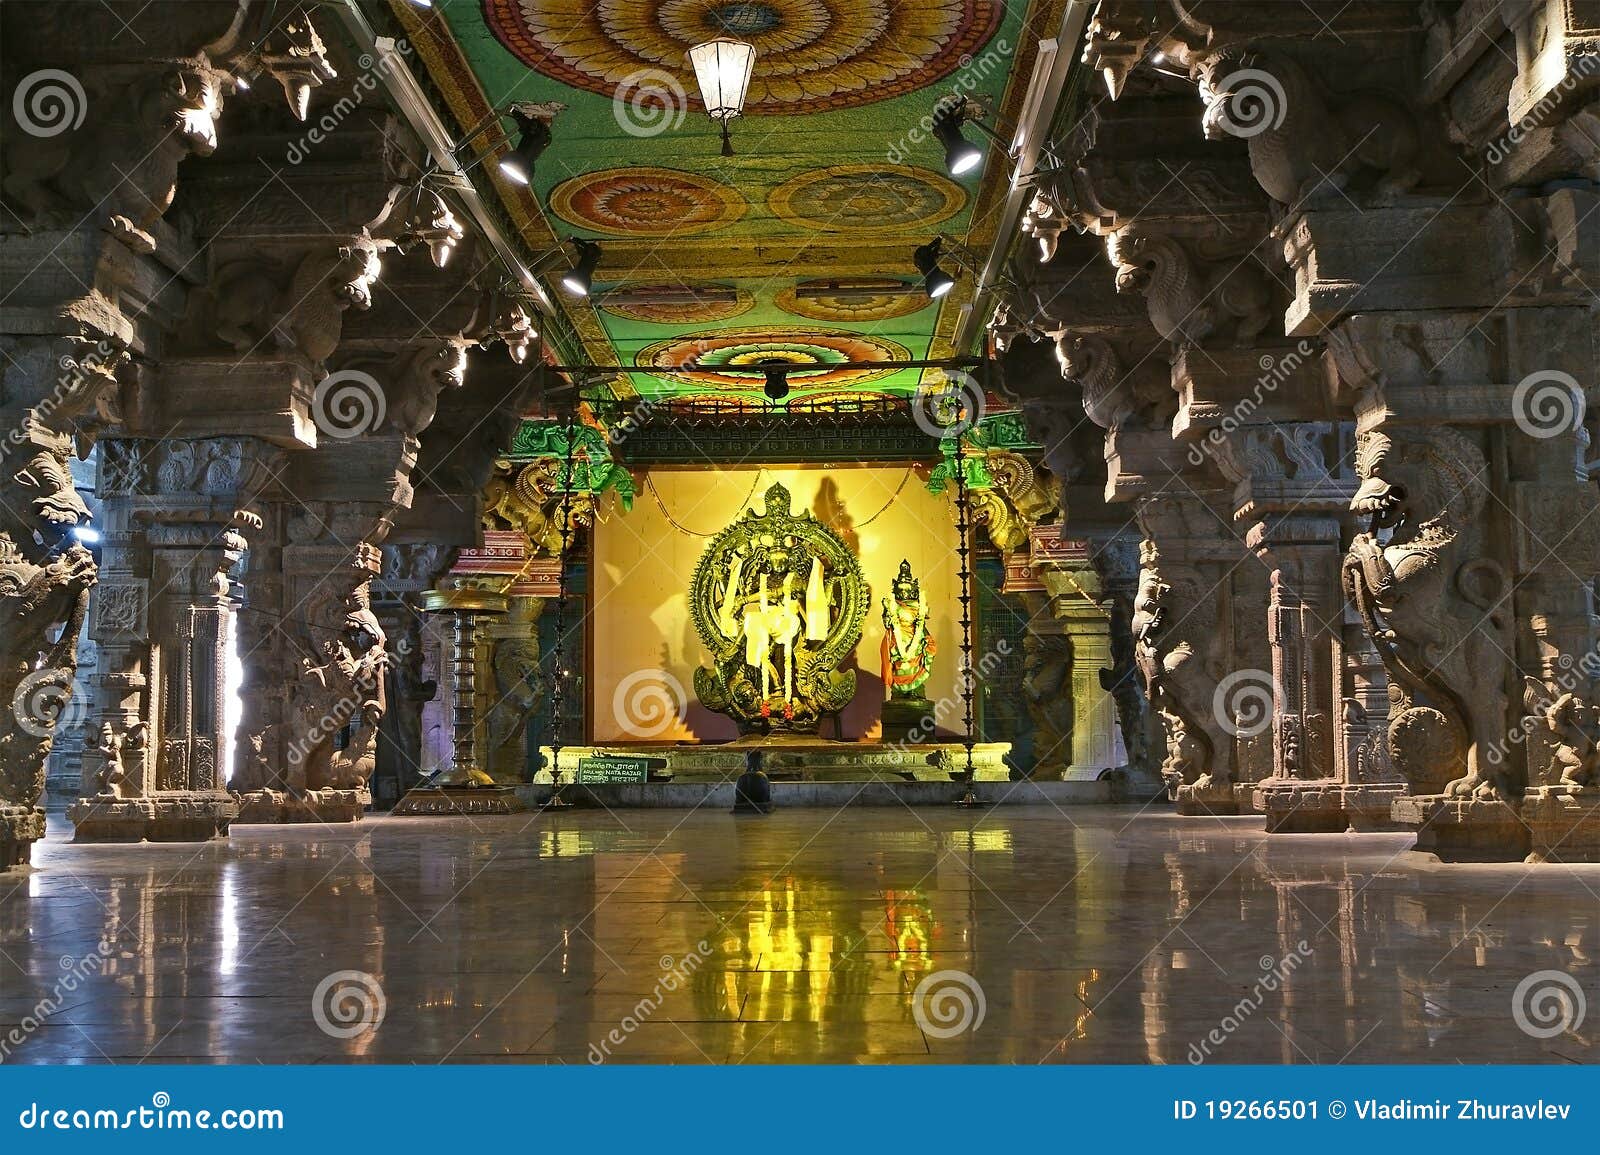 meenakshi hindu temple in madurai, tamil nadu